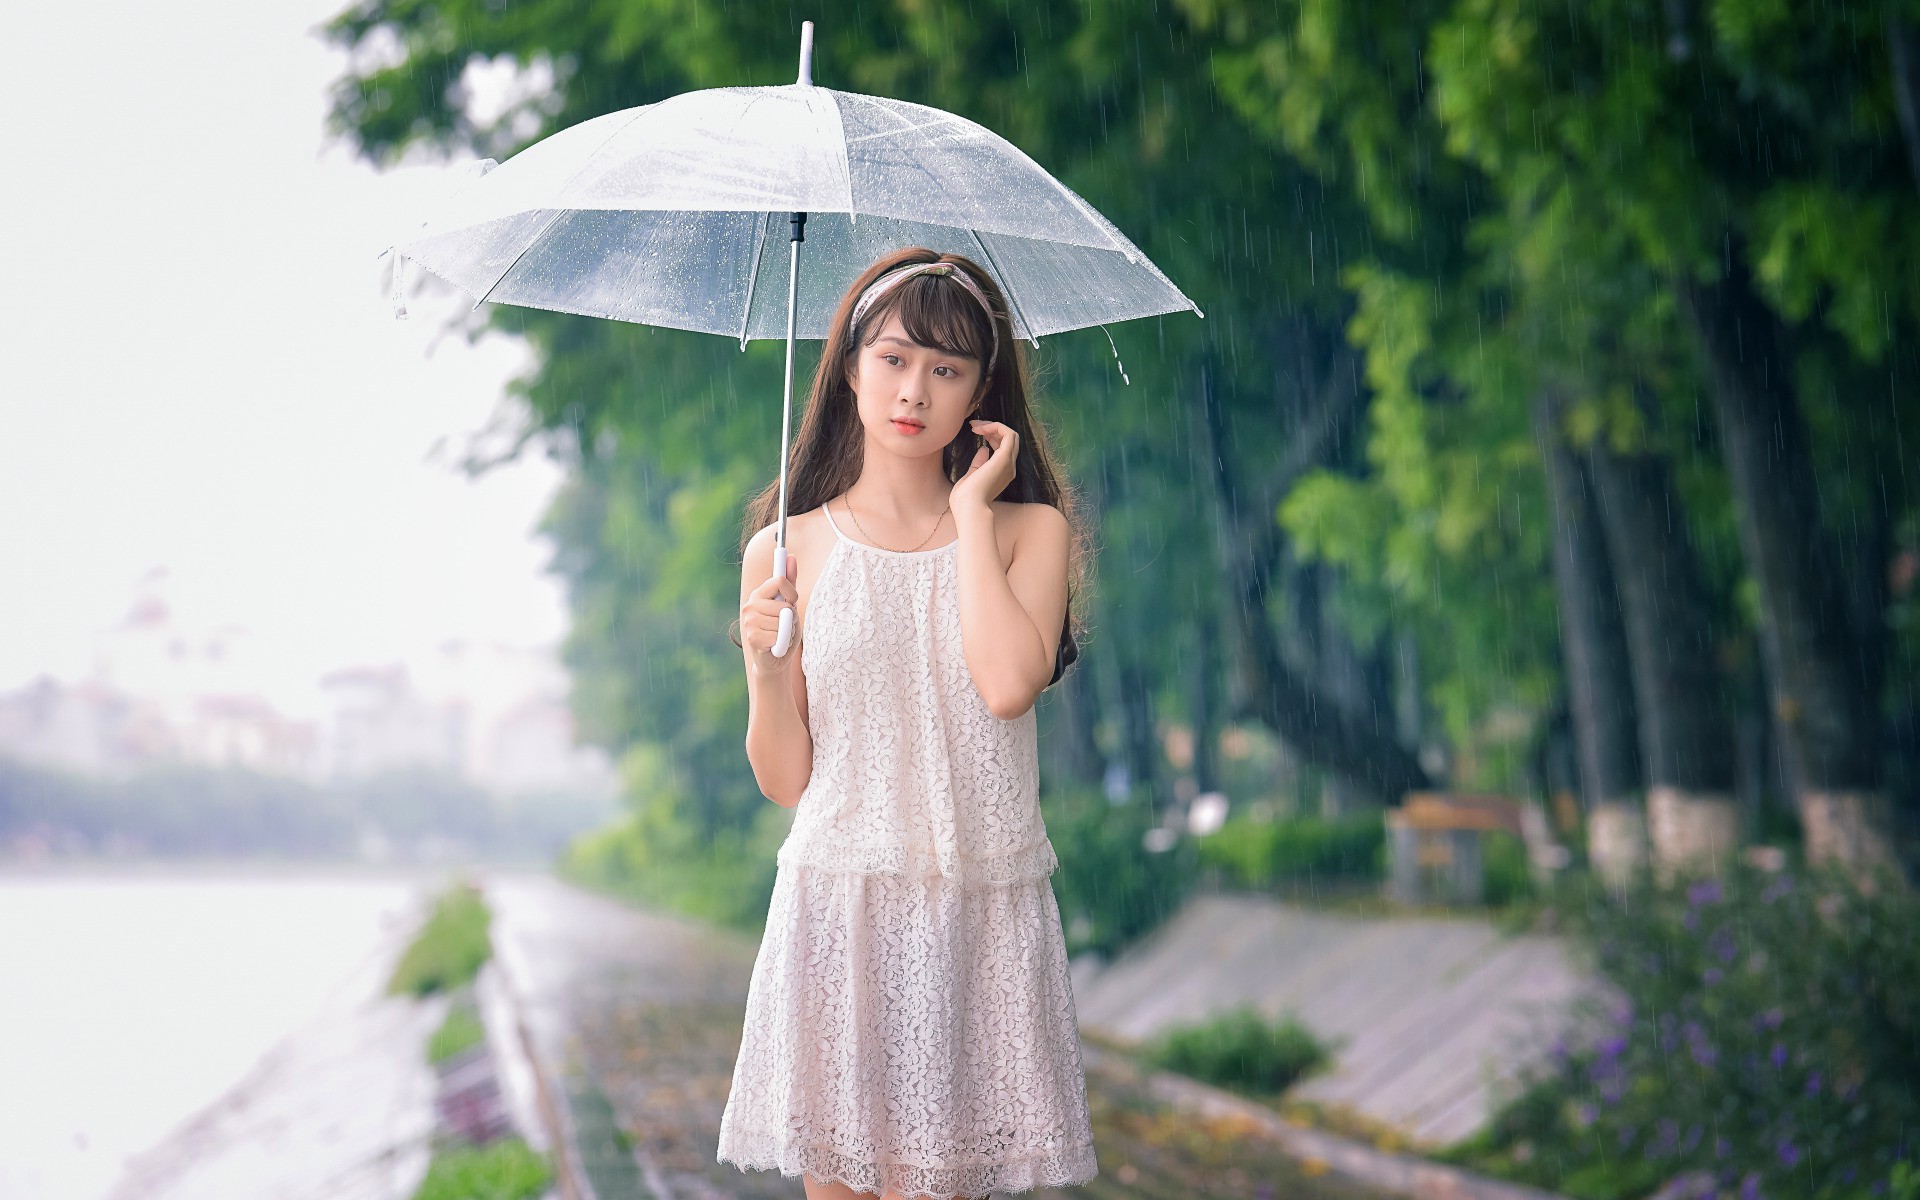 Beauty with umbrella photo